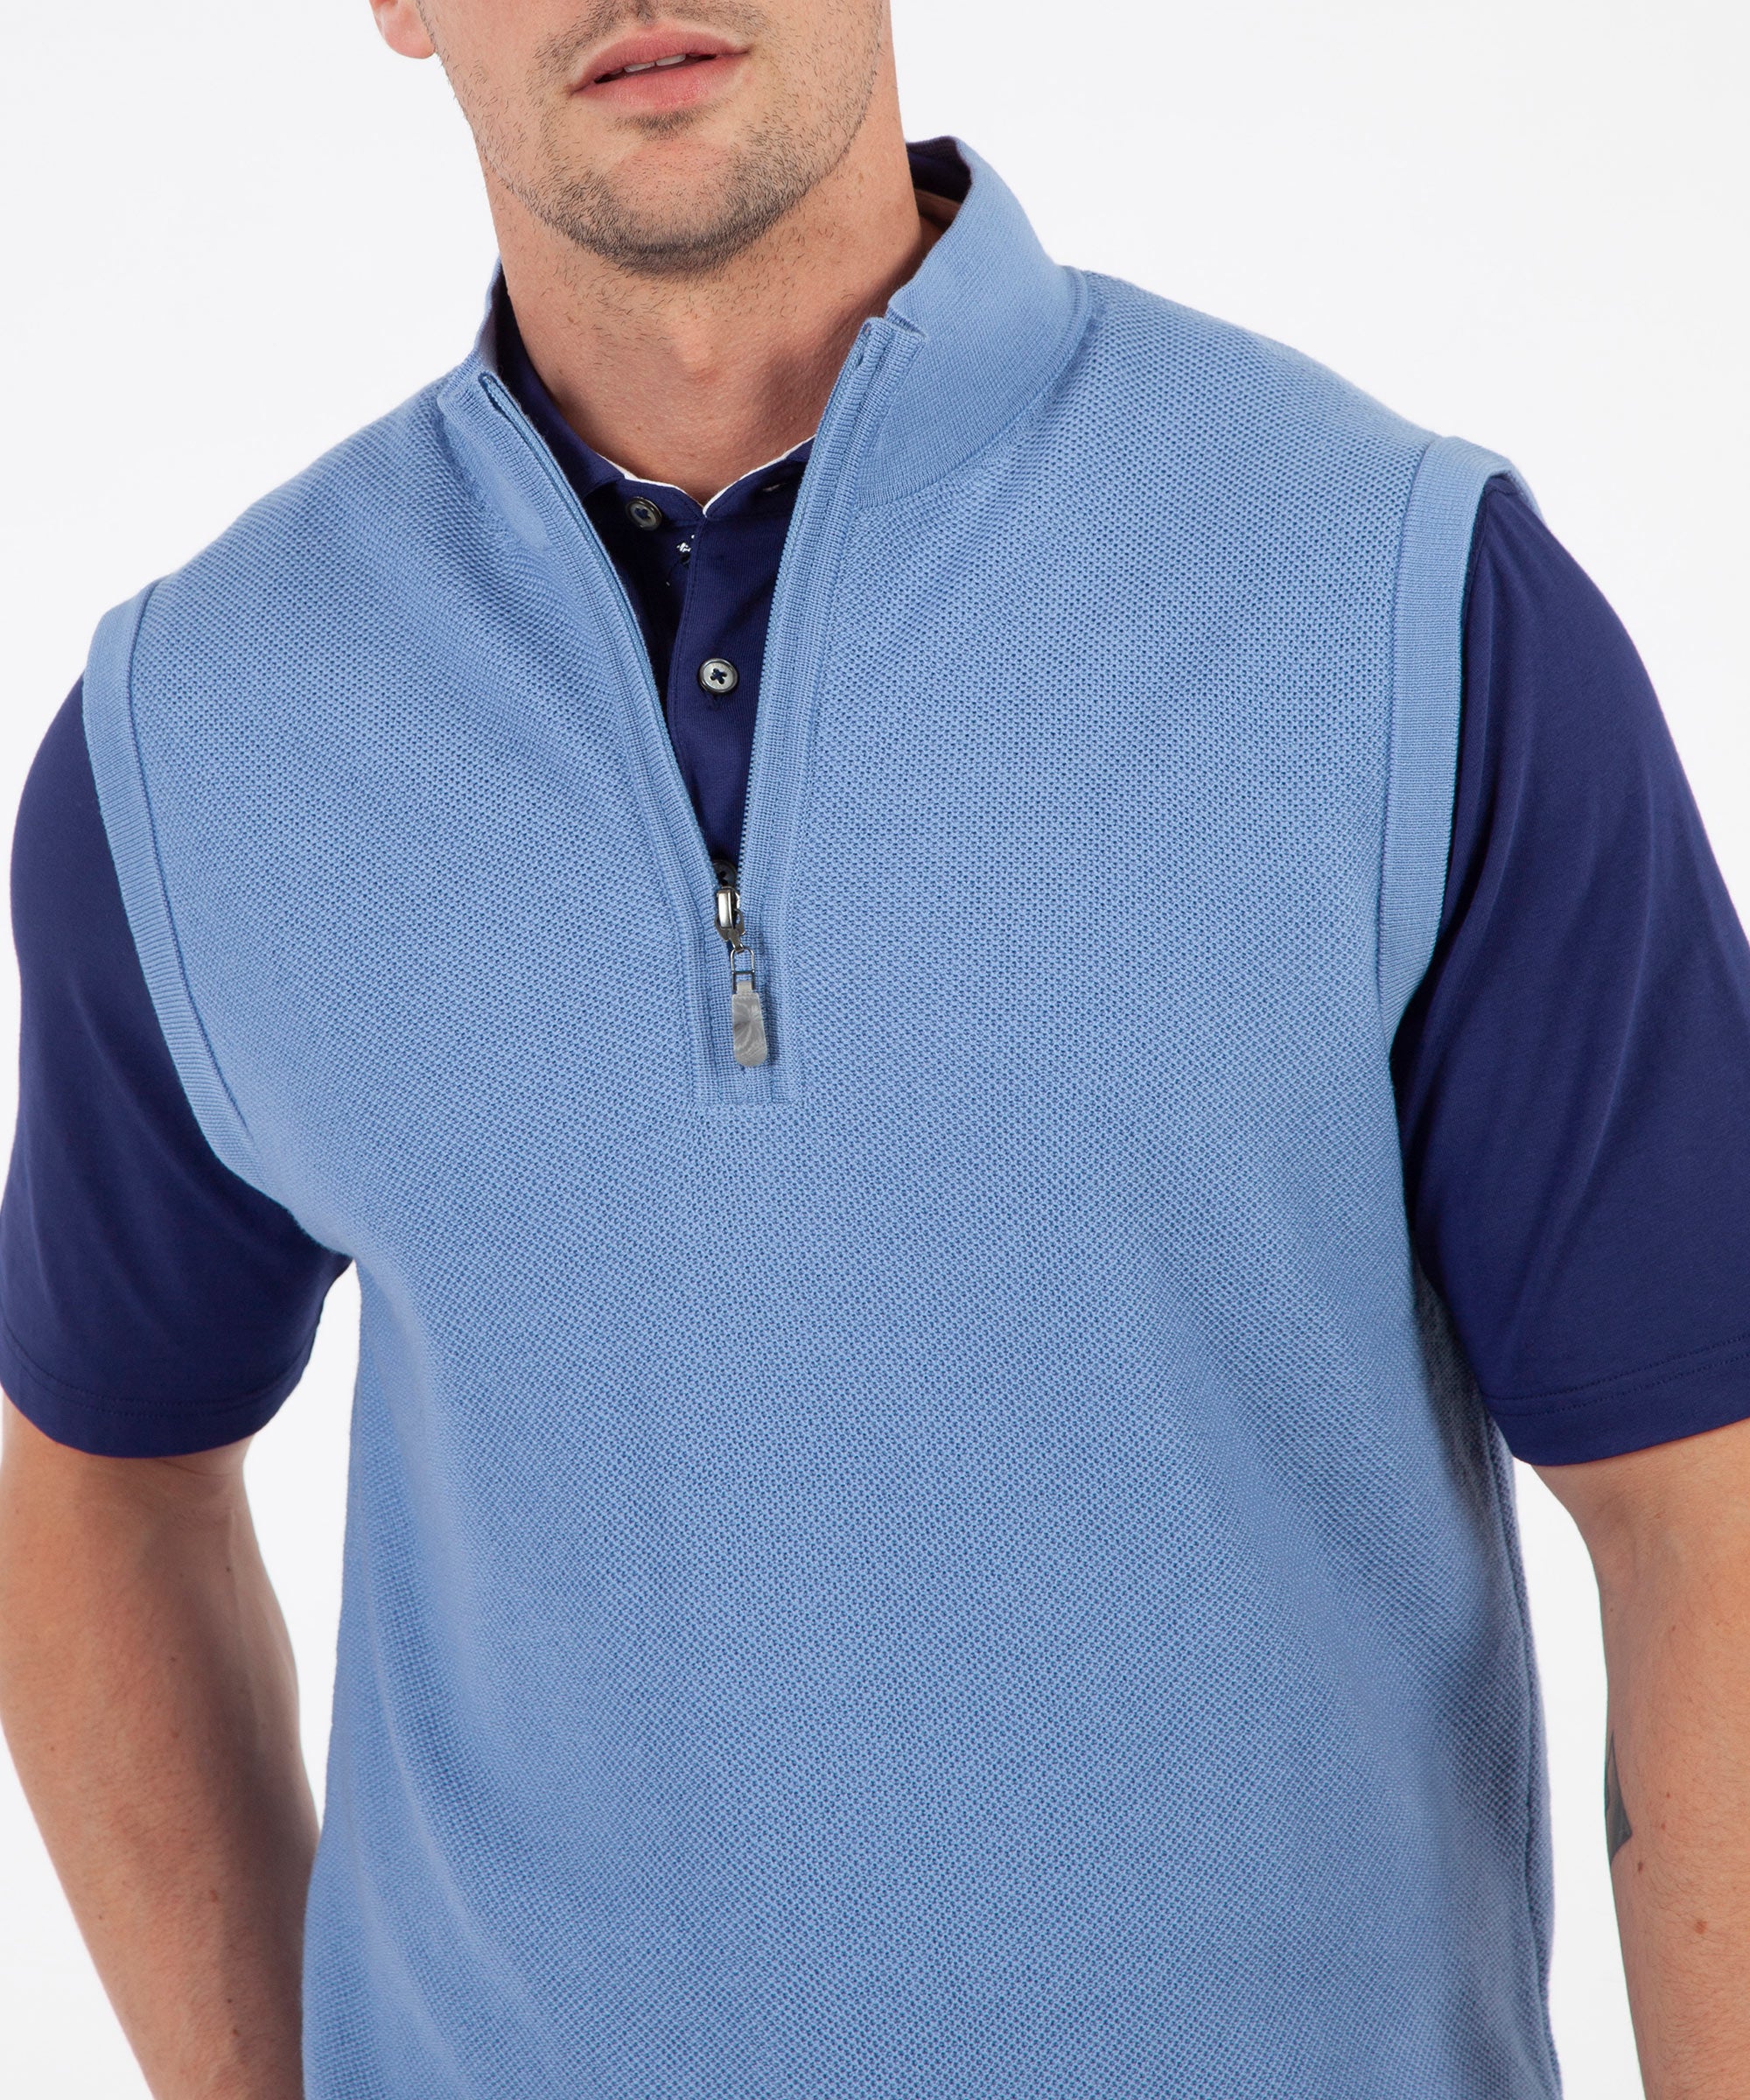 Signature Merino Tuck-Stitch Quarter-Zip Lined Wind Sweater Vest